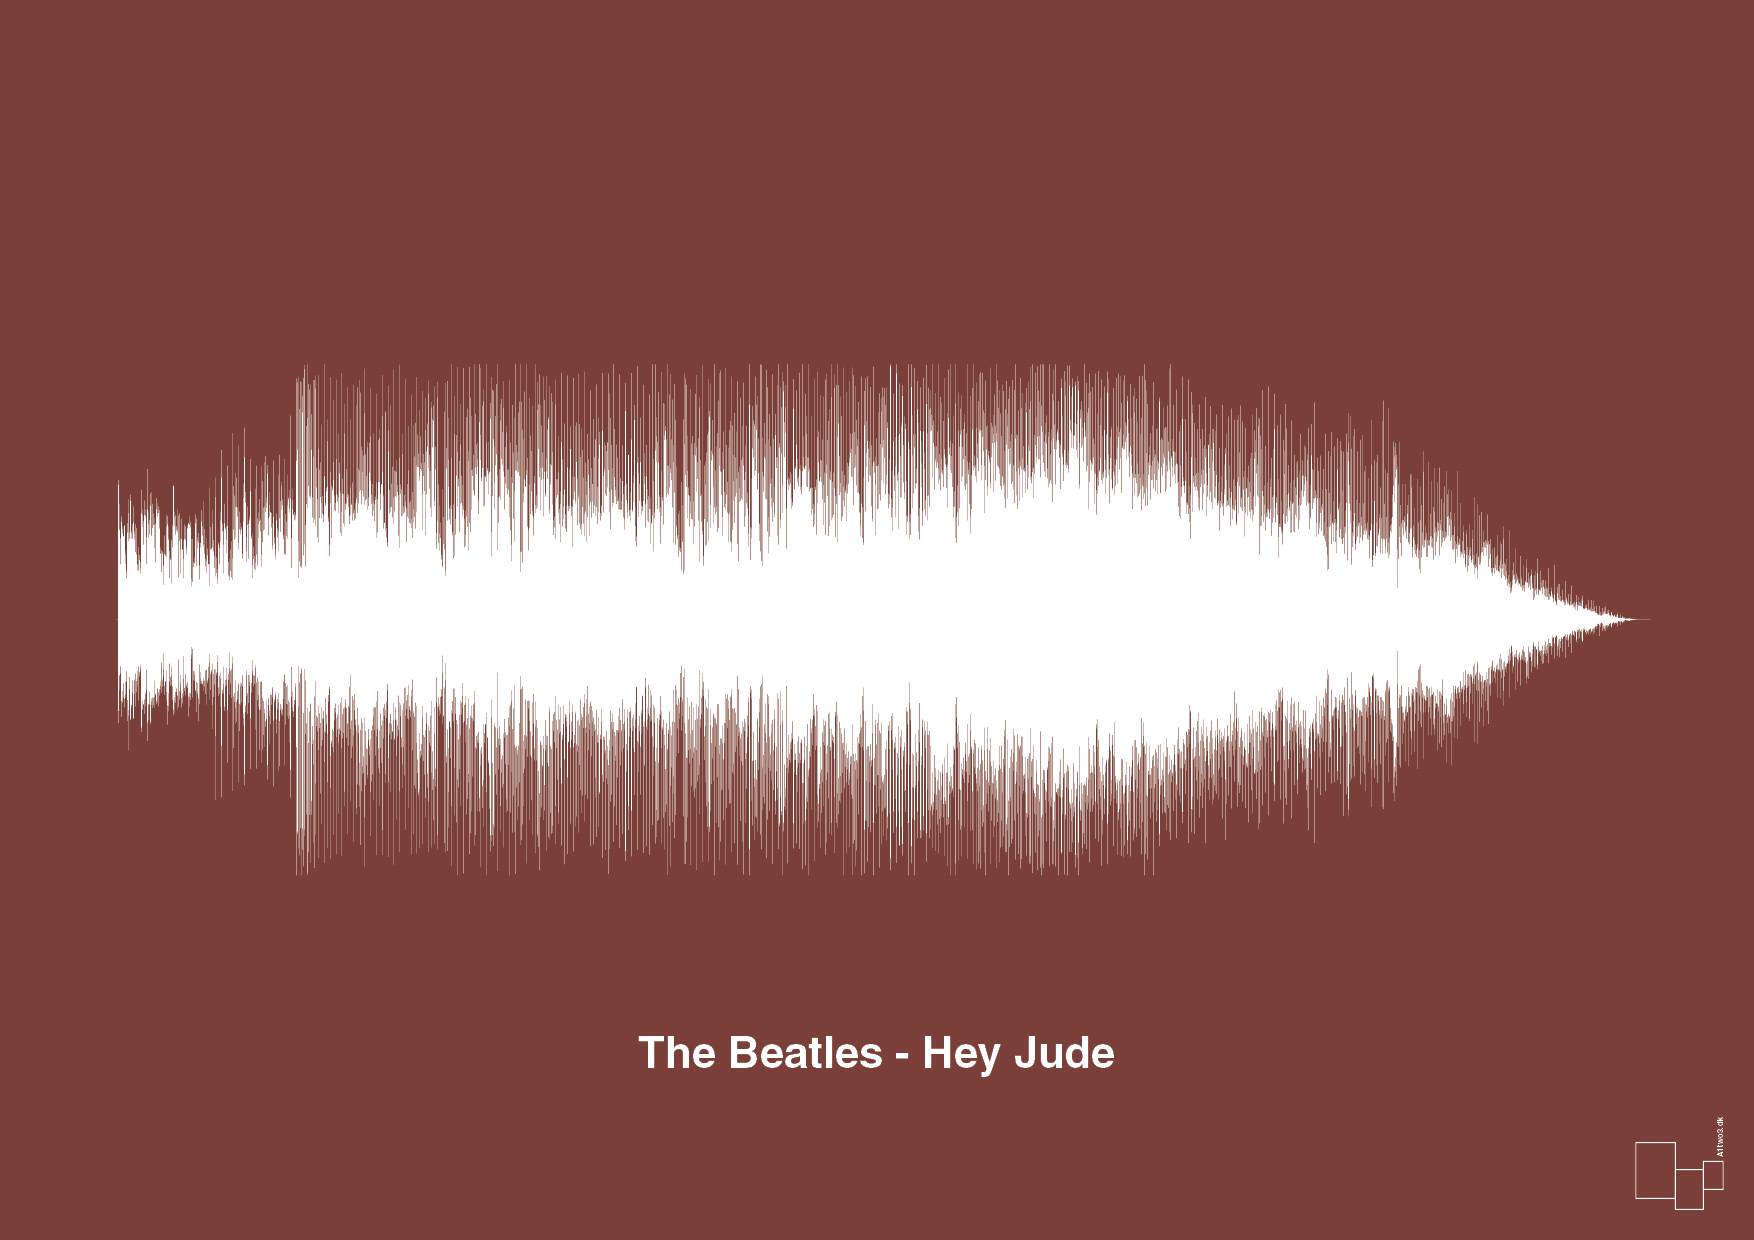 the beatles - hey jude - Plakat med Musik i Red Pepper